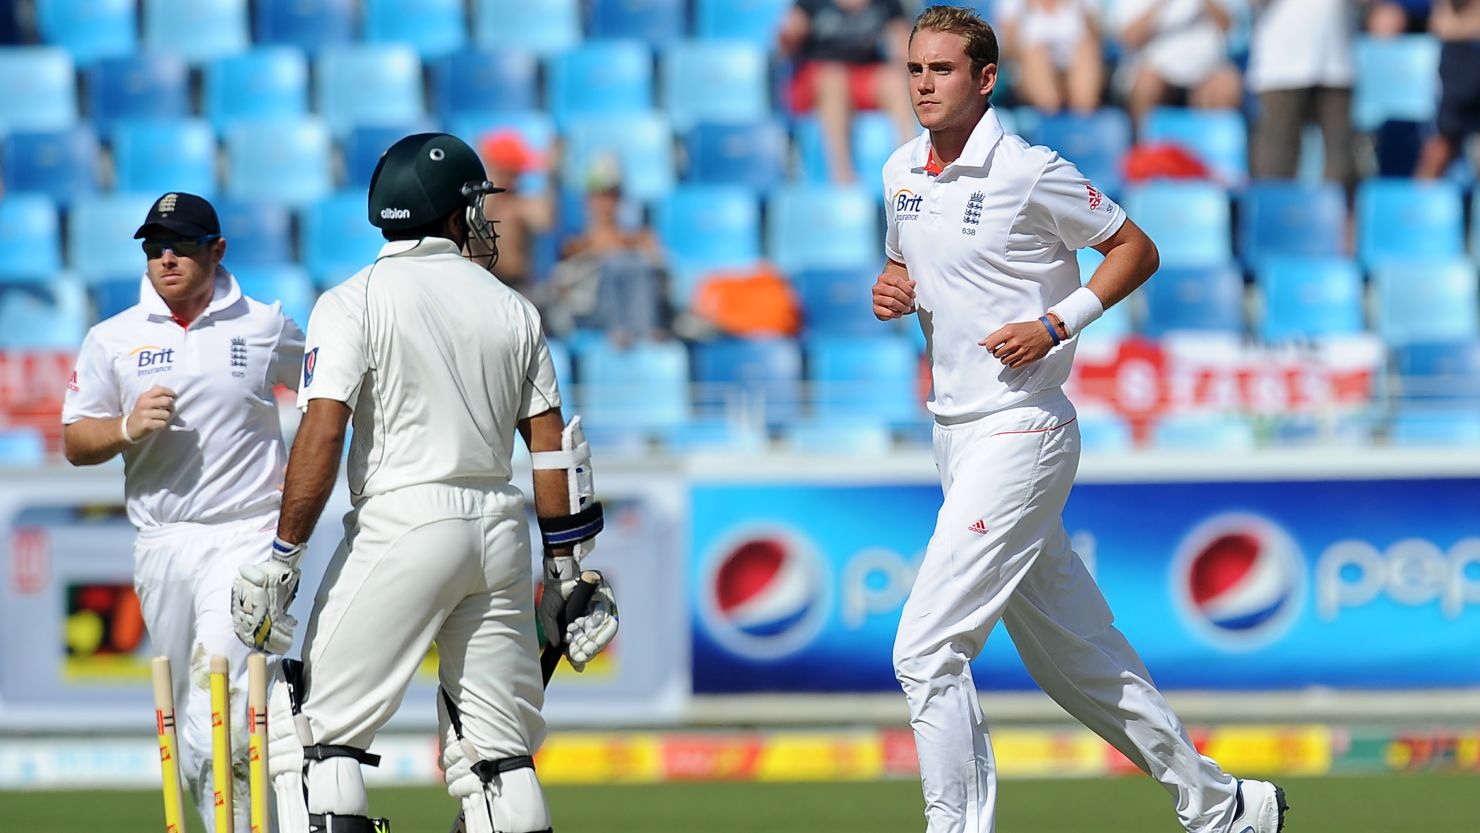 England fast bowler Stuart Broad bowled Pakistan opener Taufiq Umar for 58 in Dubai.